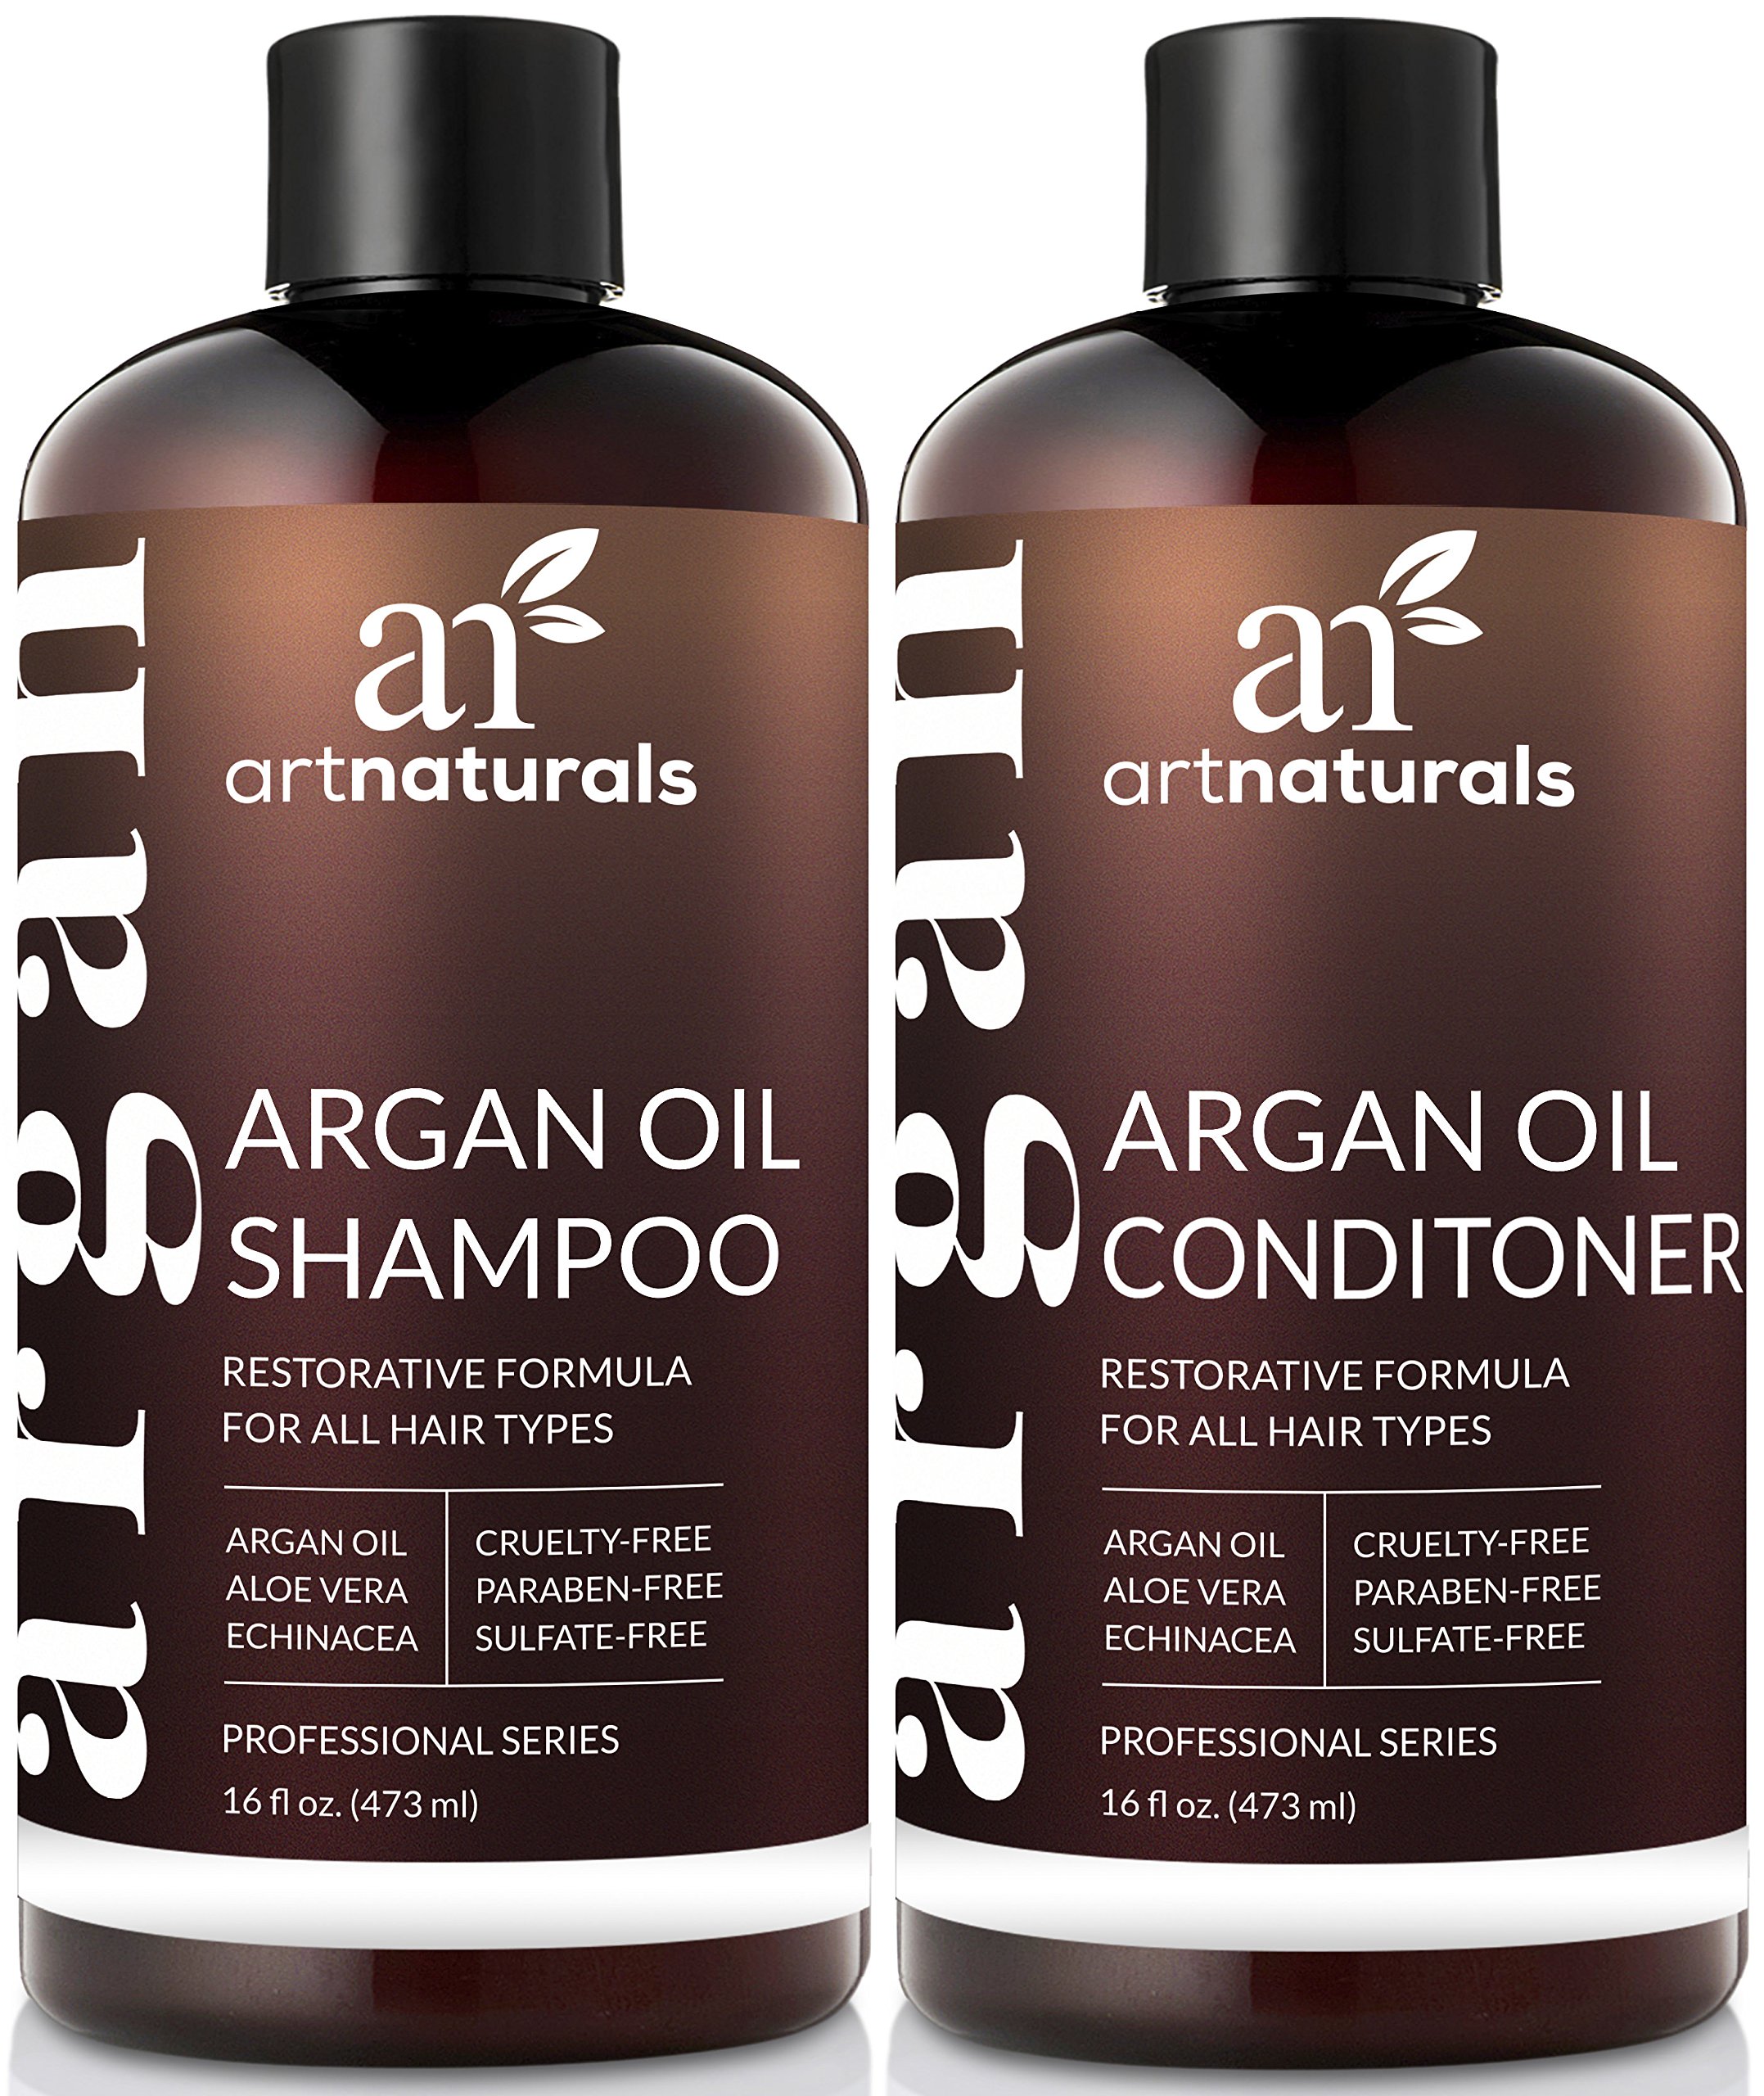 argan oil hair color instructions